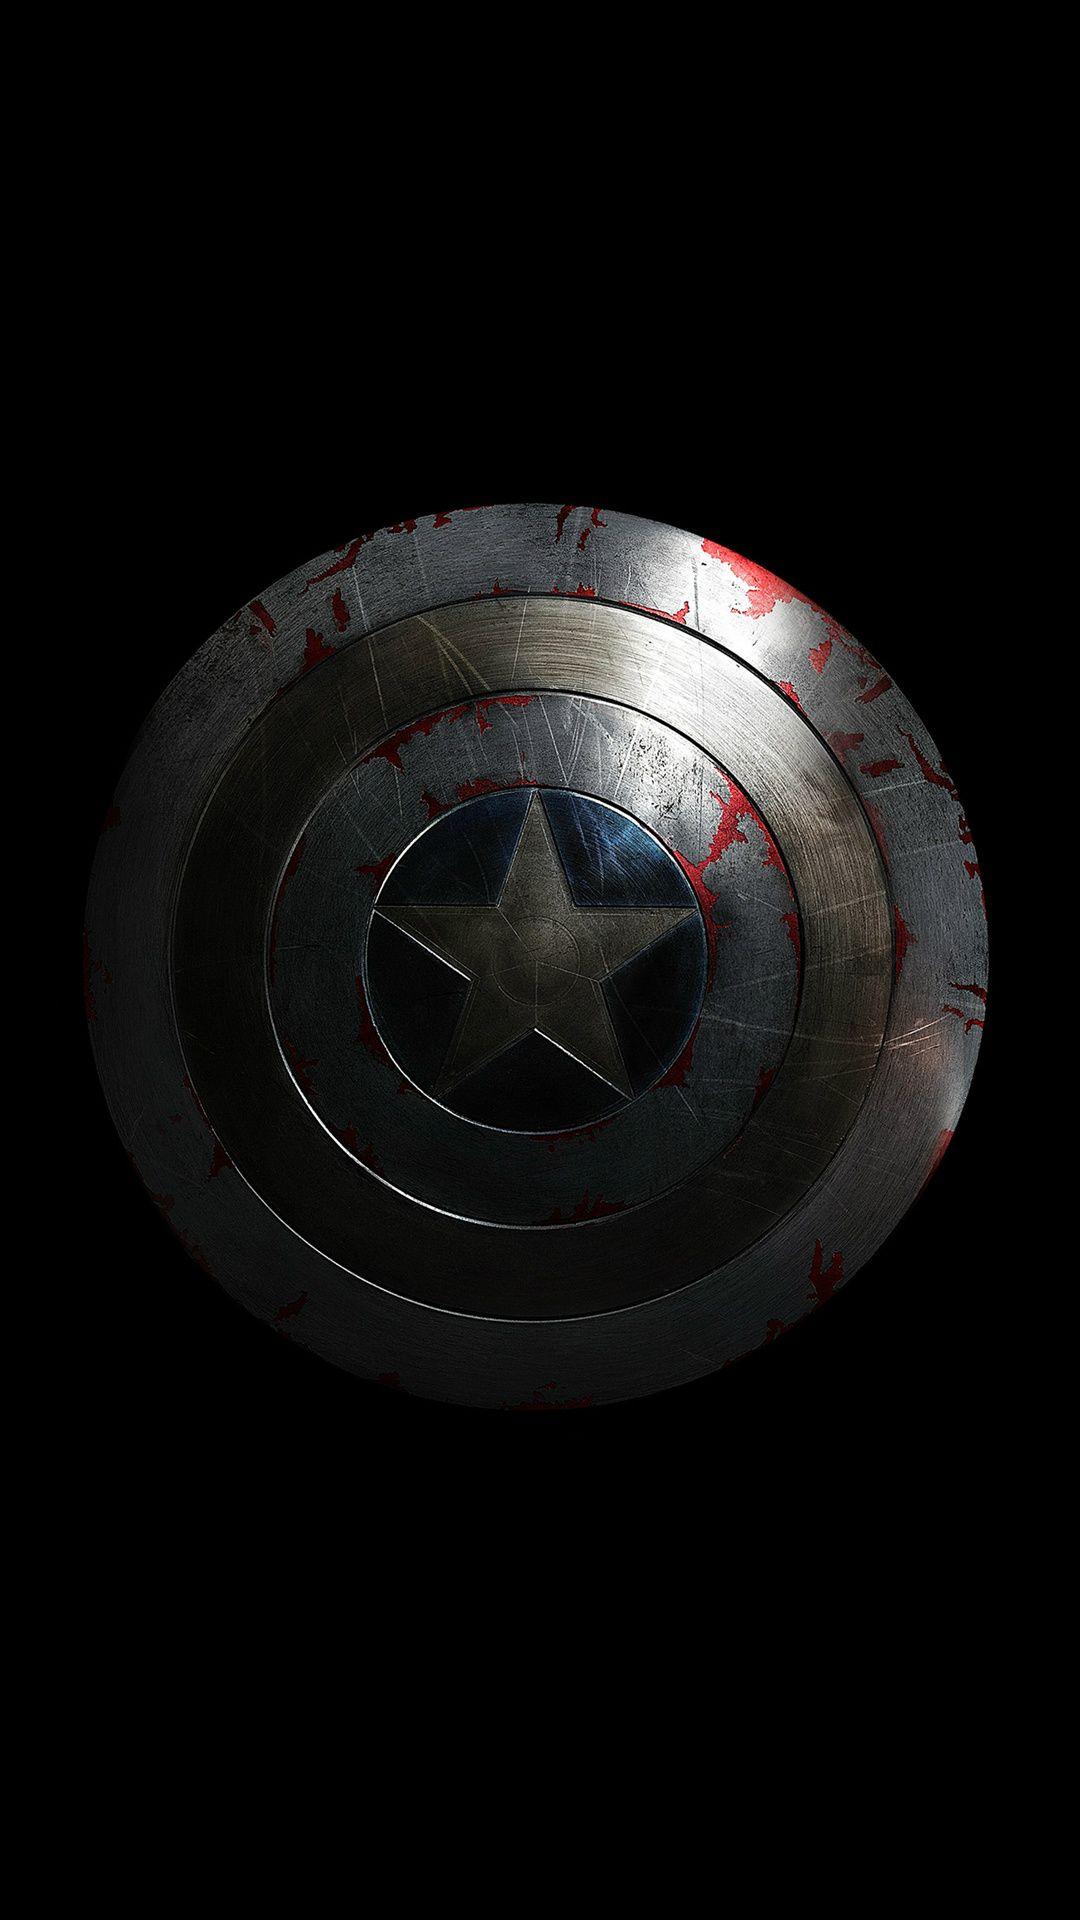 Captain America Avengers Hero Sheild Small Dark iPhone 8 Wallpaper. Avengers wallpaper, Captain america wallpaper, Captain america shield wallpaper